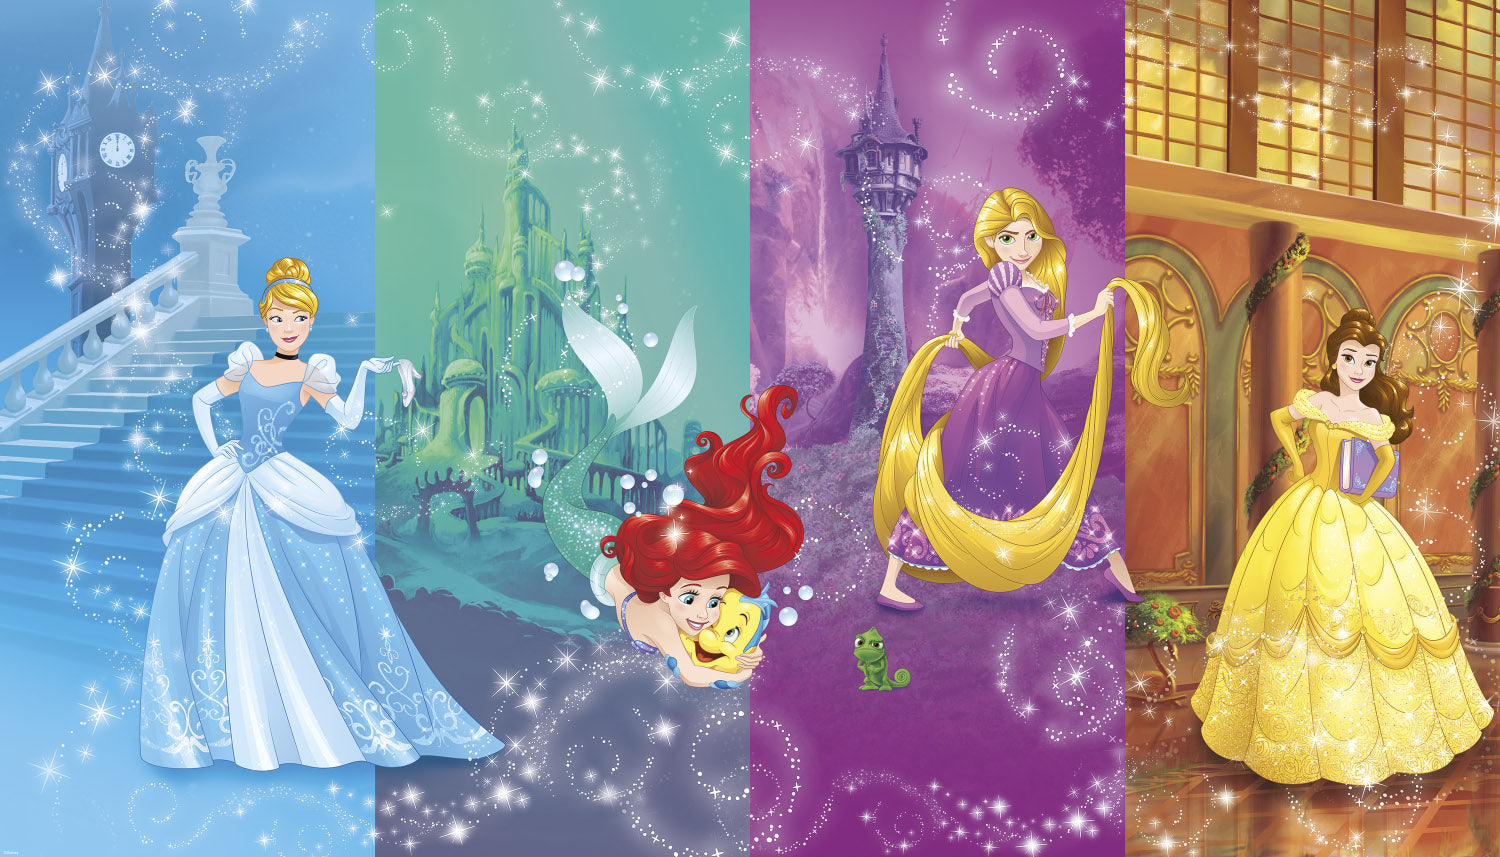 Disney princesses HD wallpaper | Disney princess wallpaper, Disney princess  movies, Disney princess characters